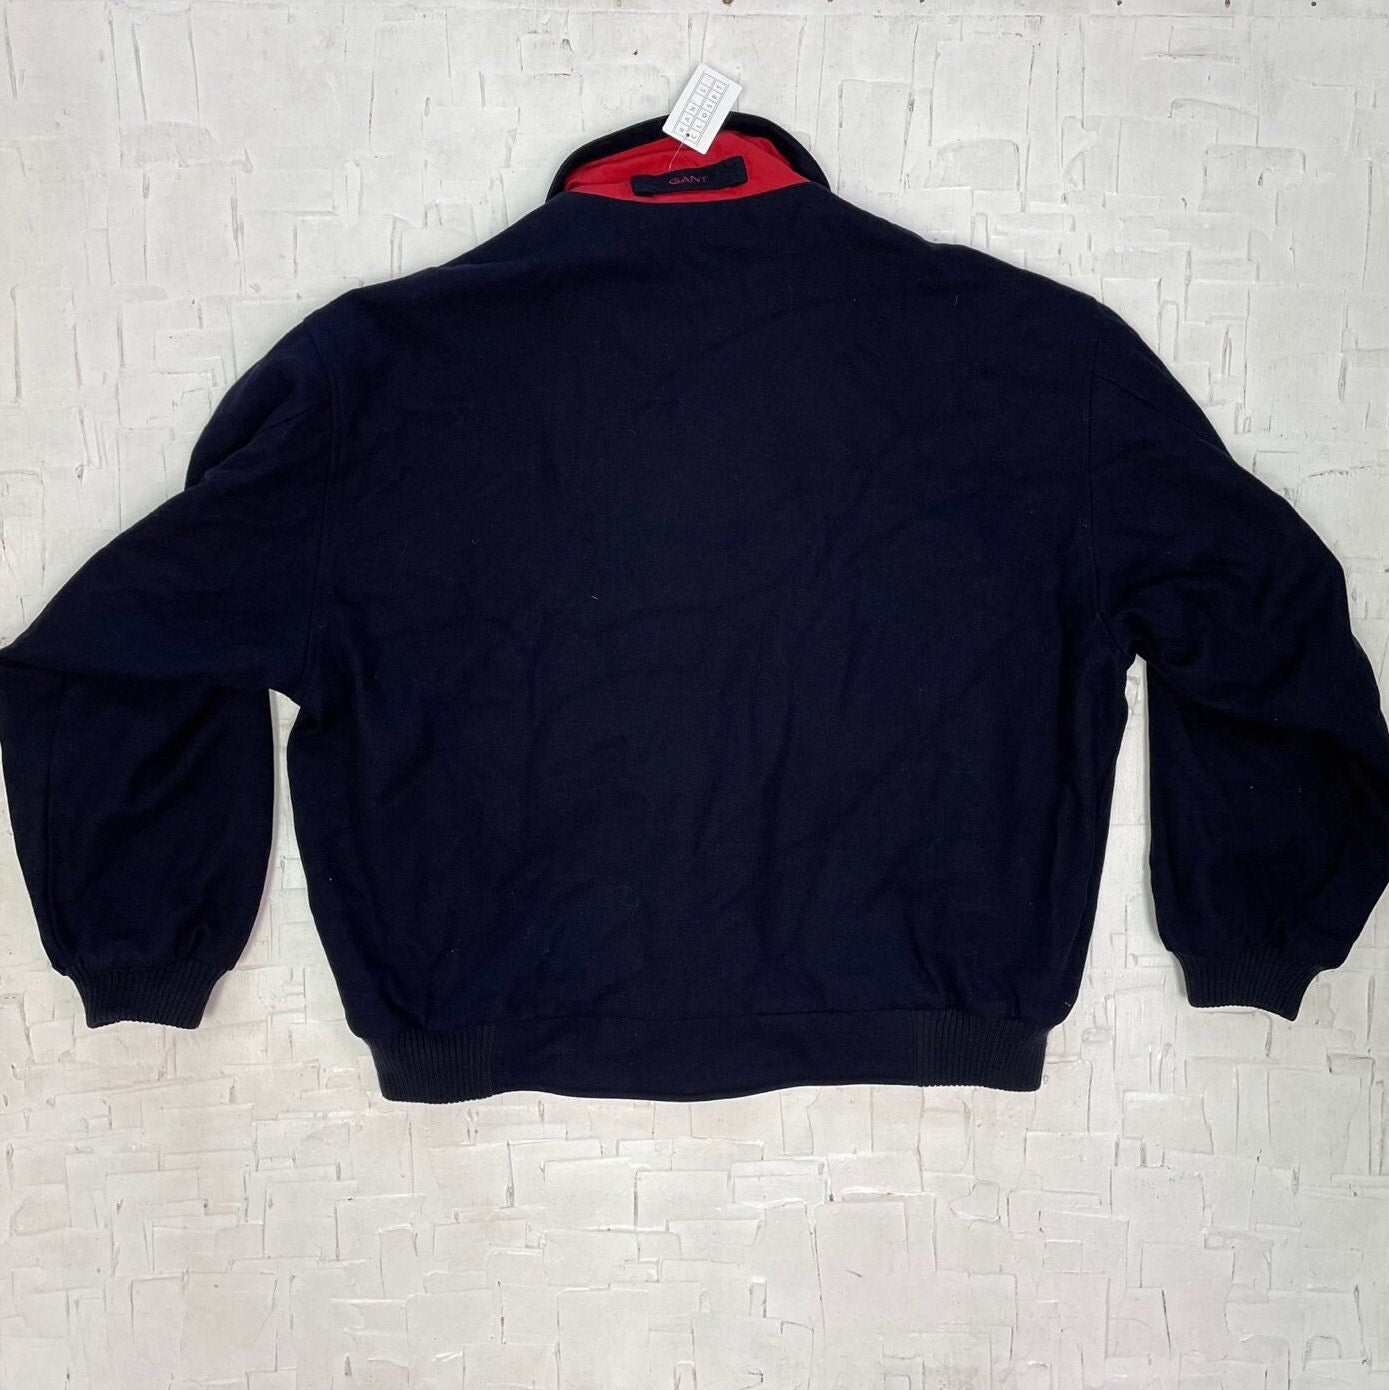 Vintage "America's Cup" The Mariners Gant USA Bomber Jacket | Vintage Jacket | Reversible | Navy | Wool Bomber | Men's Size L | M-3056